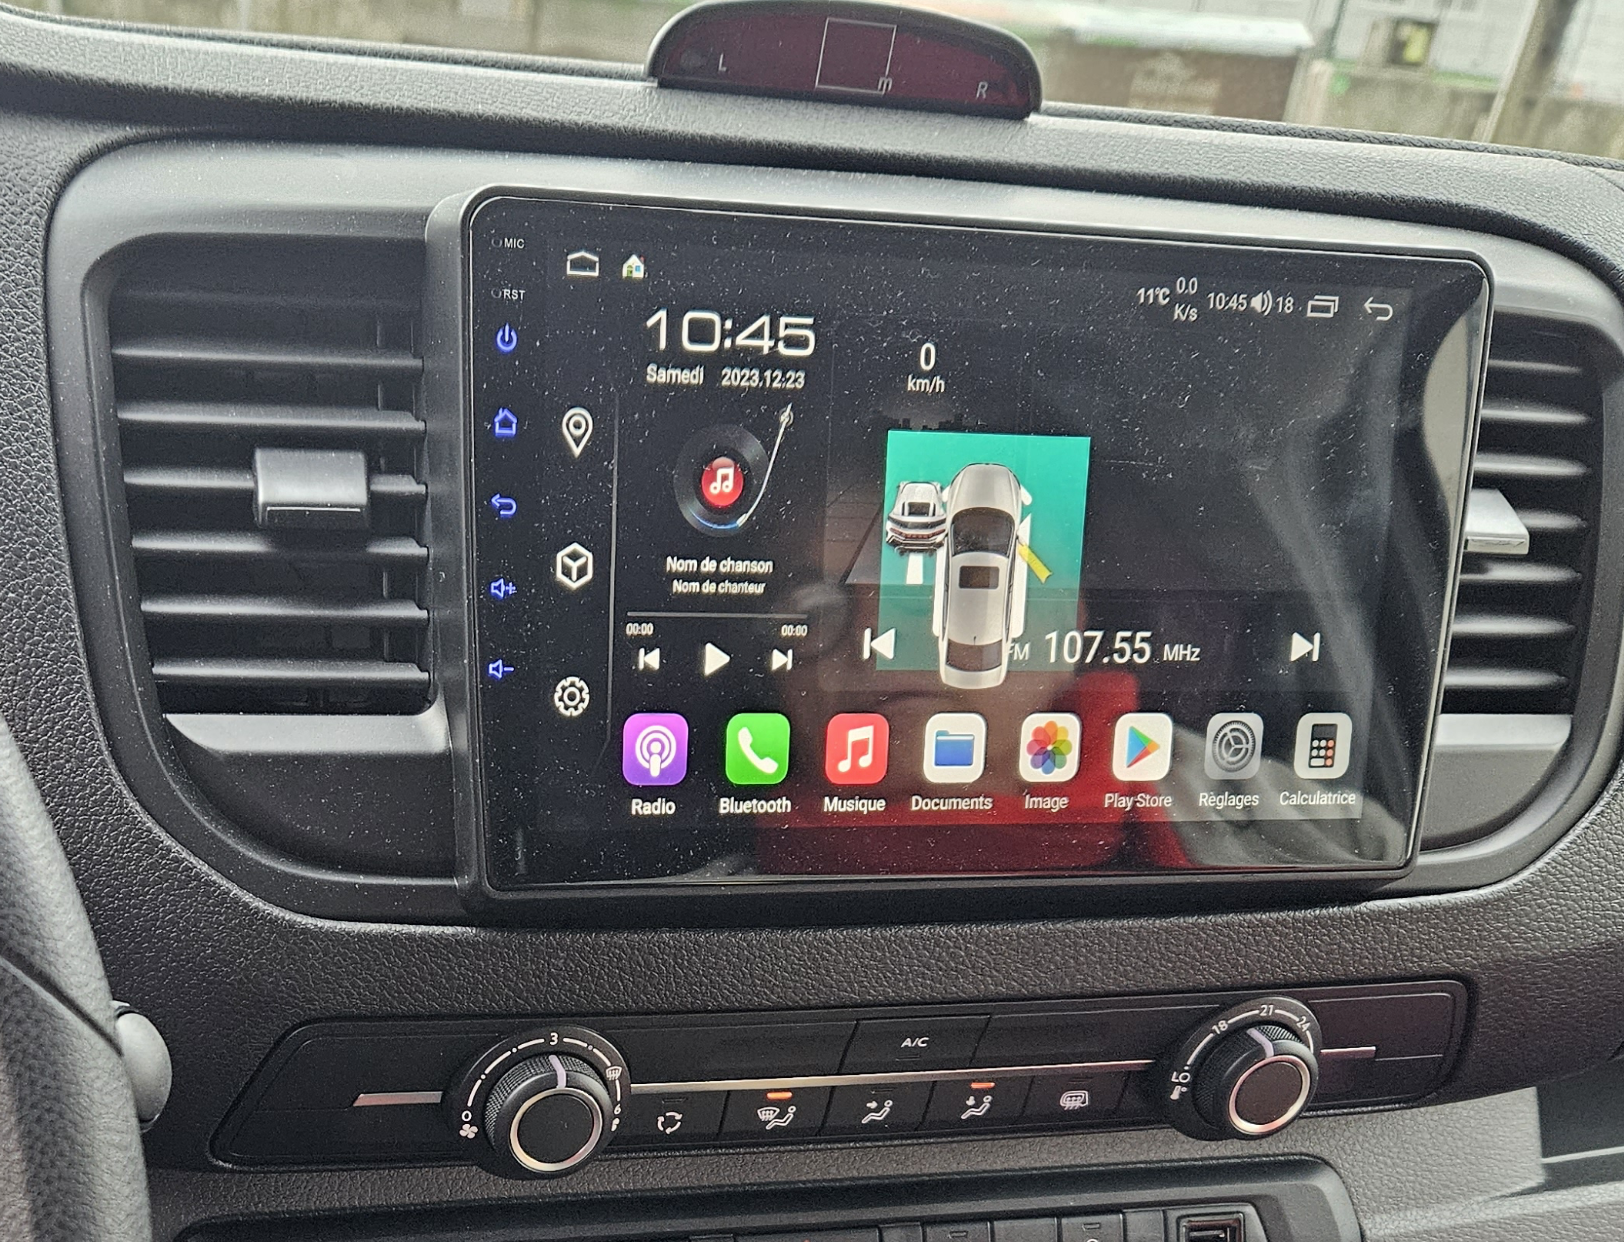 Ecran tactile QLED Android 13.0 + Apple Carplay sans fil Opel Vivaro depuis 2020 et Opel Zafira Life depuis 2019